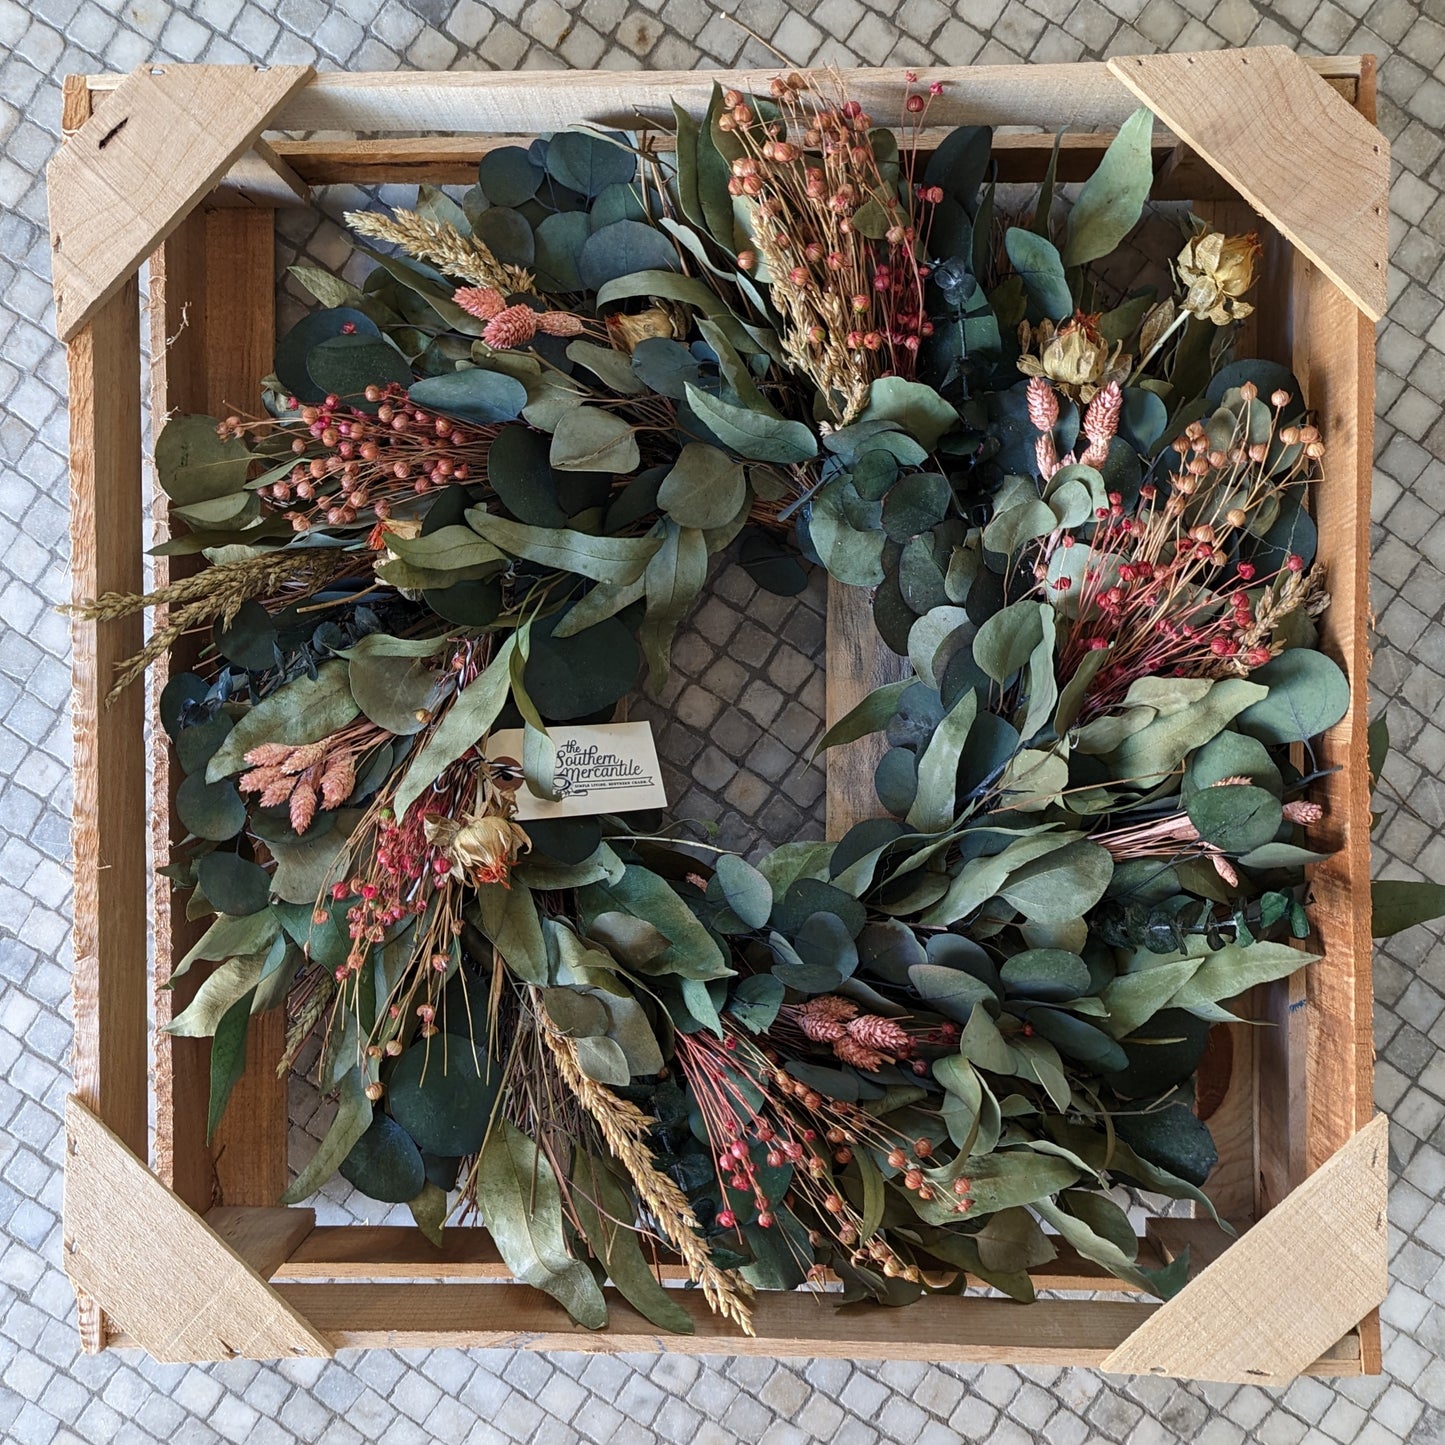 Dried Wreaths